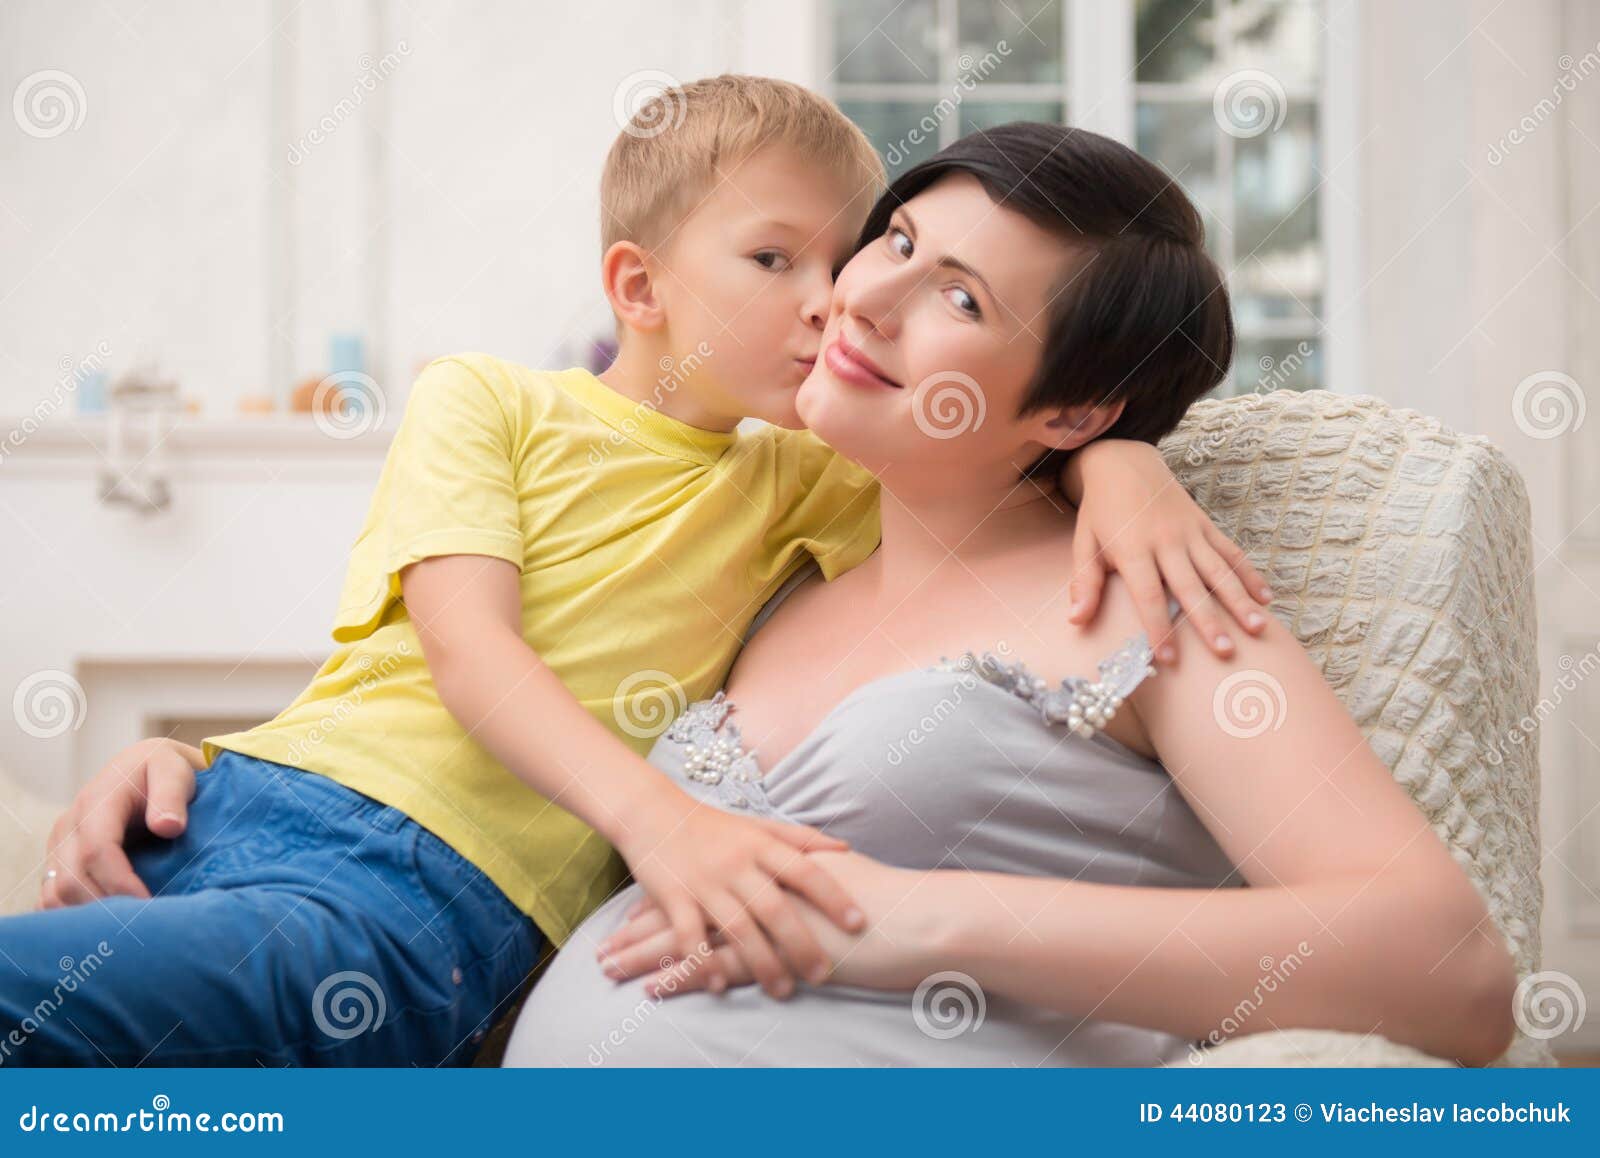 Волосатые киски мама с сыном. Mother pregnancy and his son.